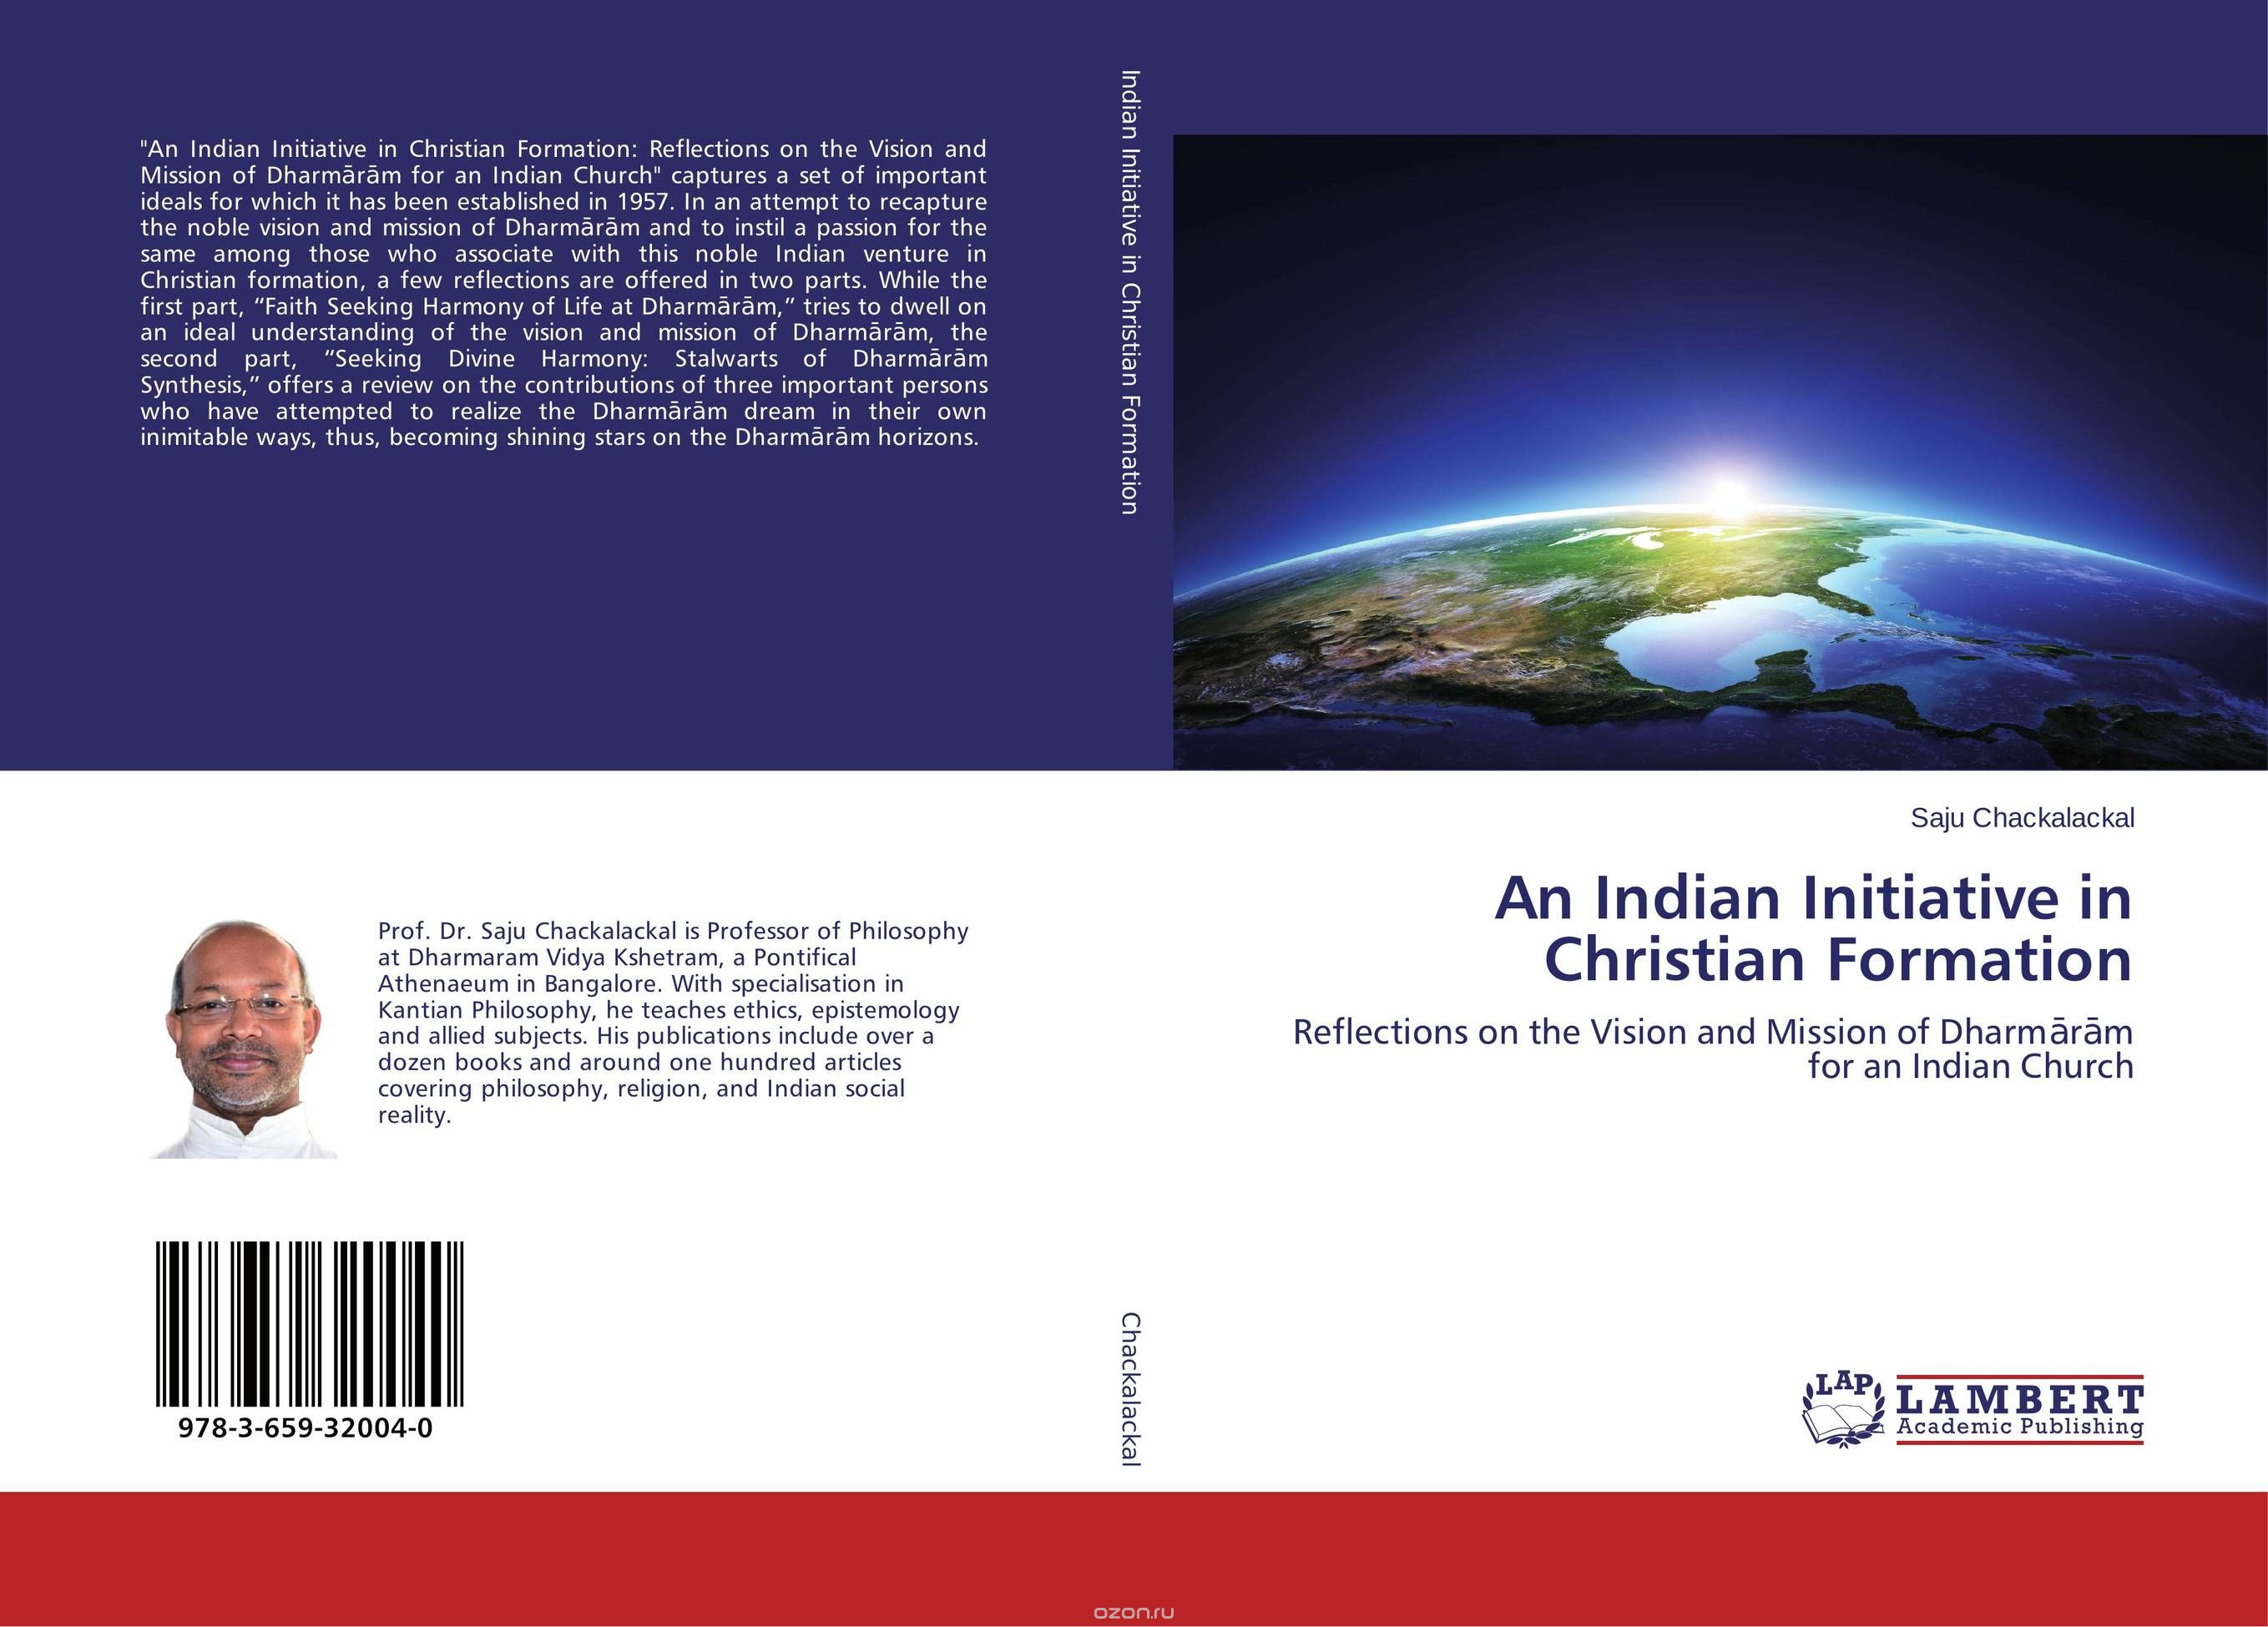 Скачать книгу "An Indian Initiative in Christian Formation"